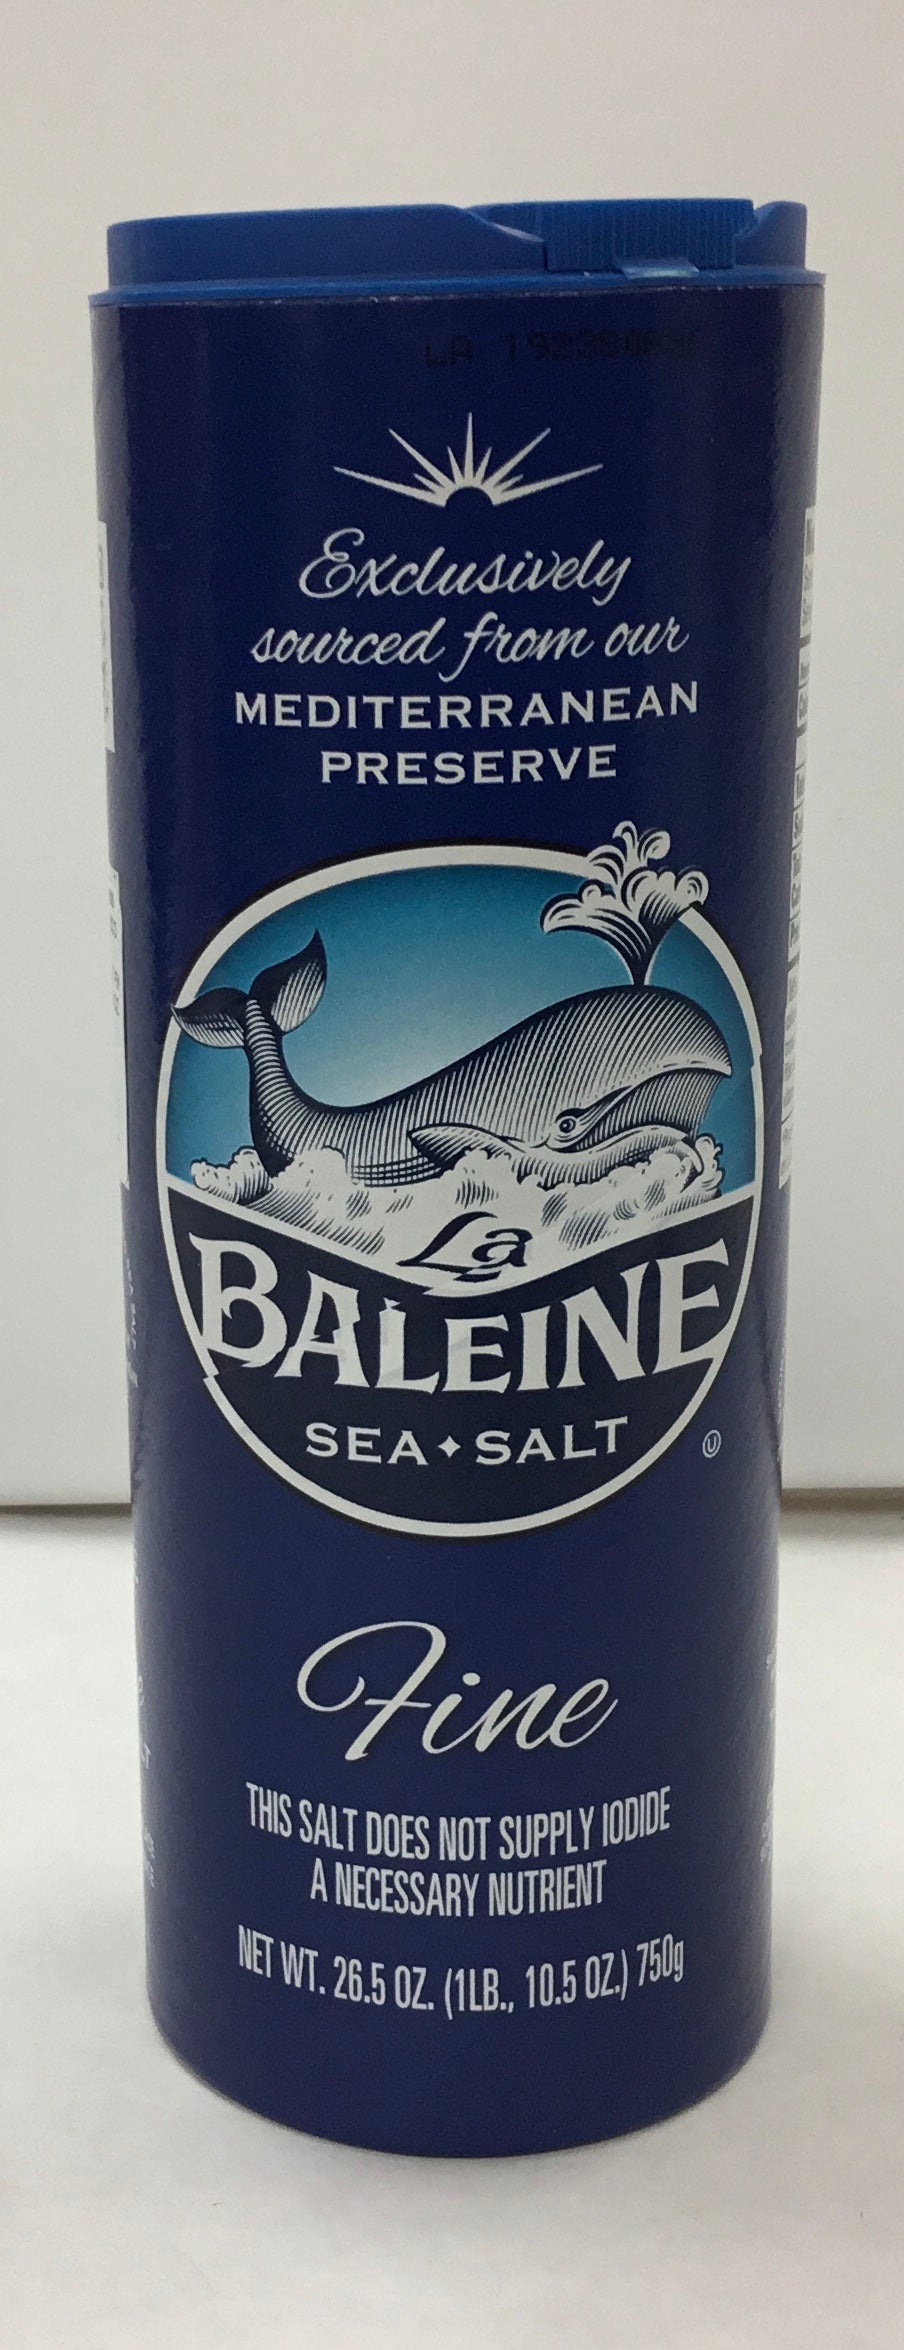 Fine Sea Salt, La Baleine